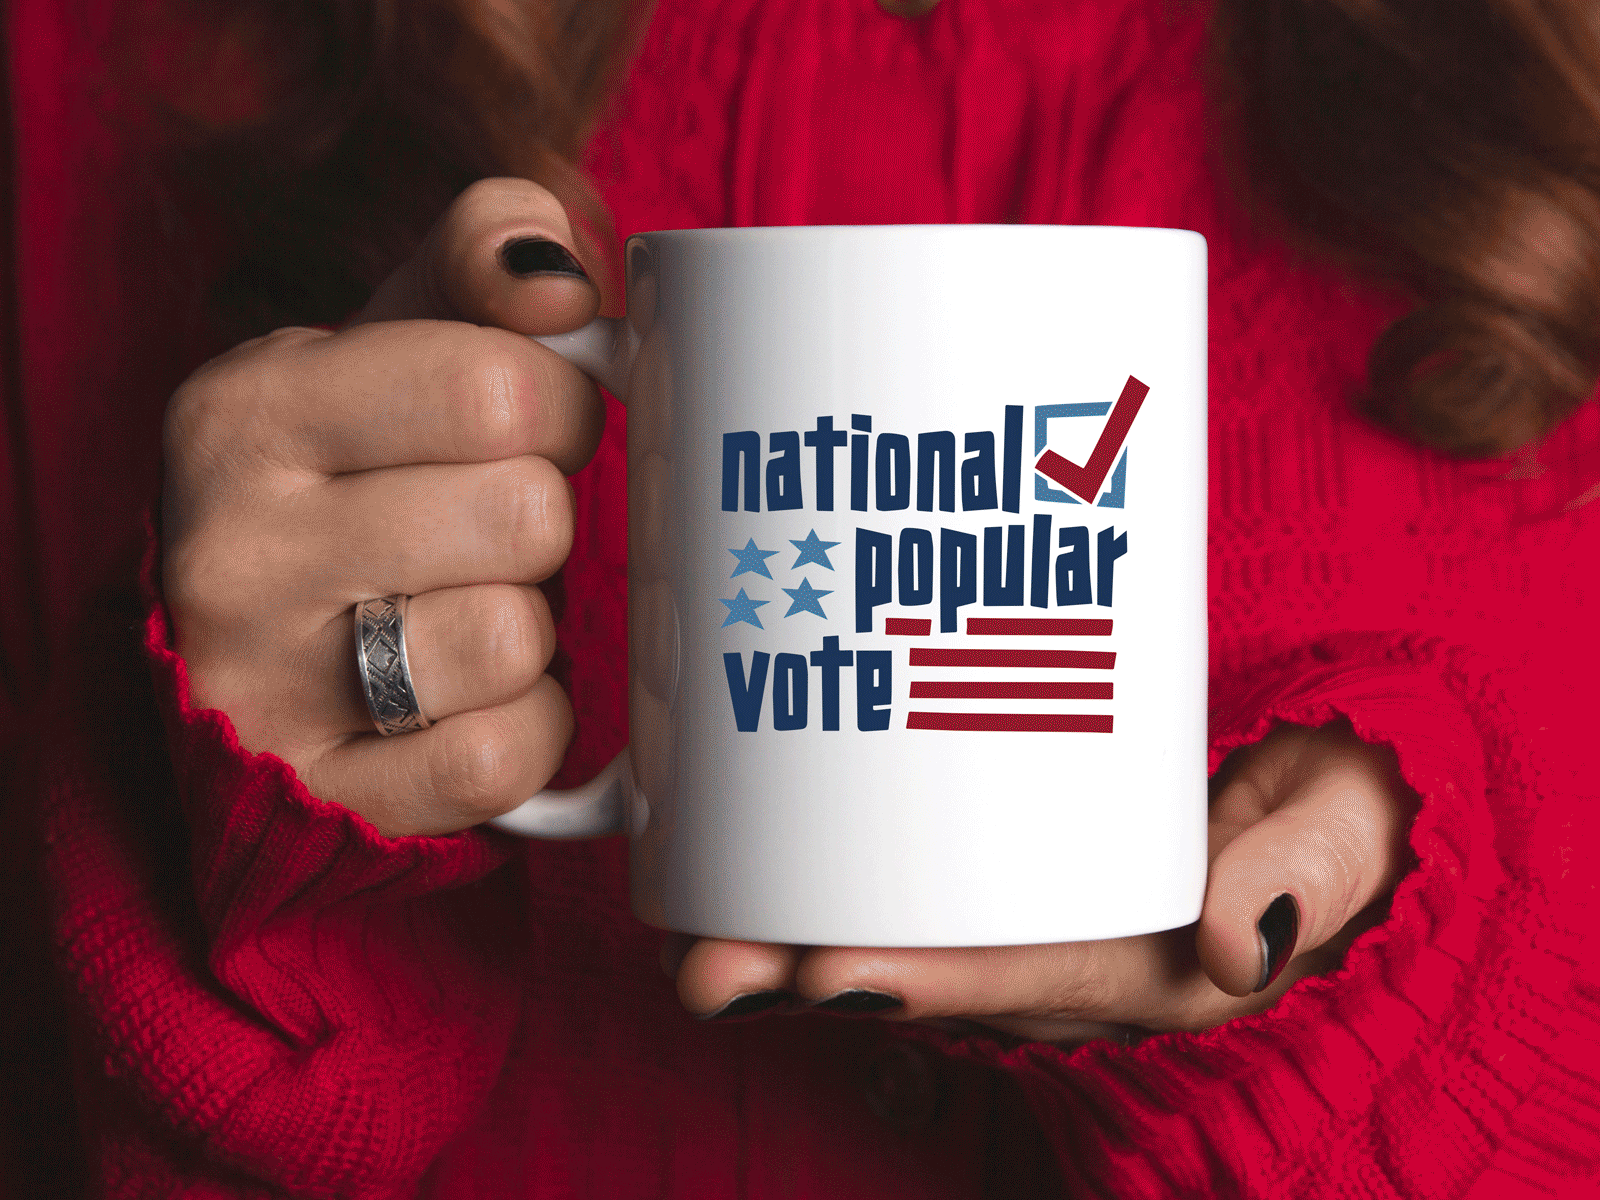 National Popular Vote